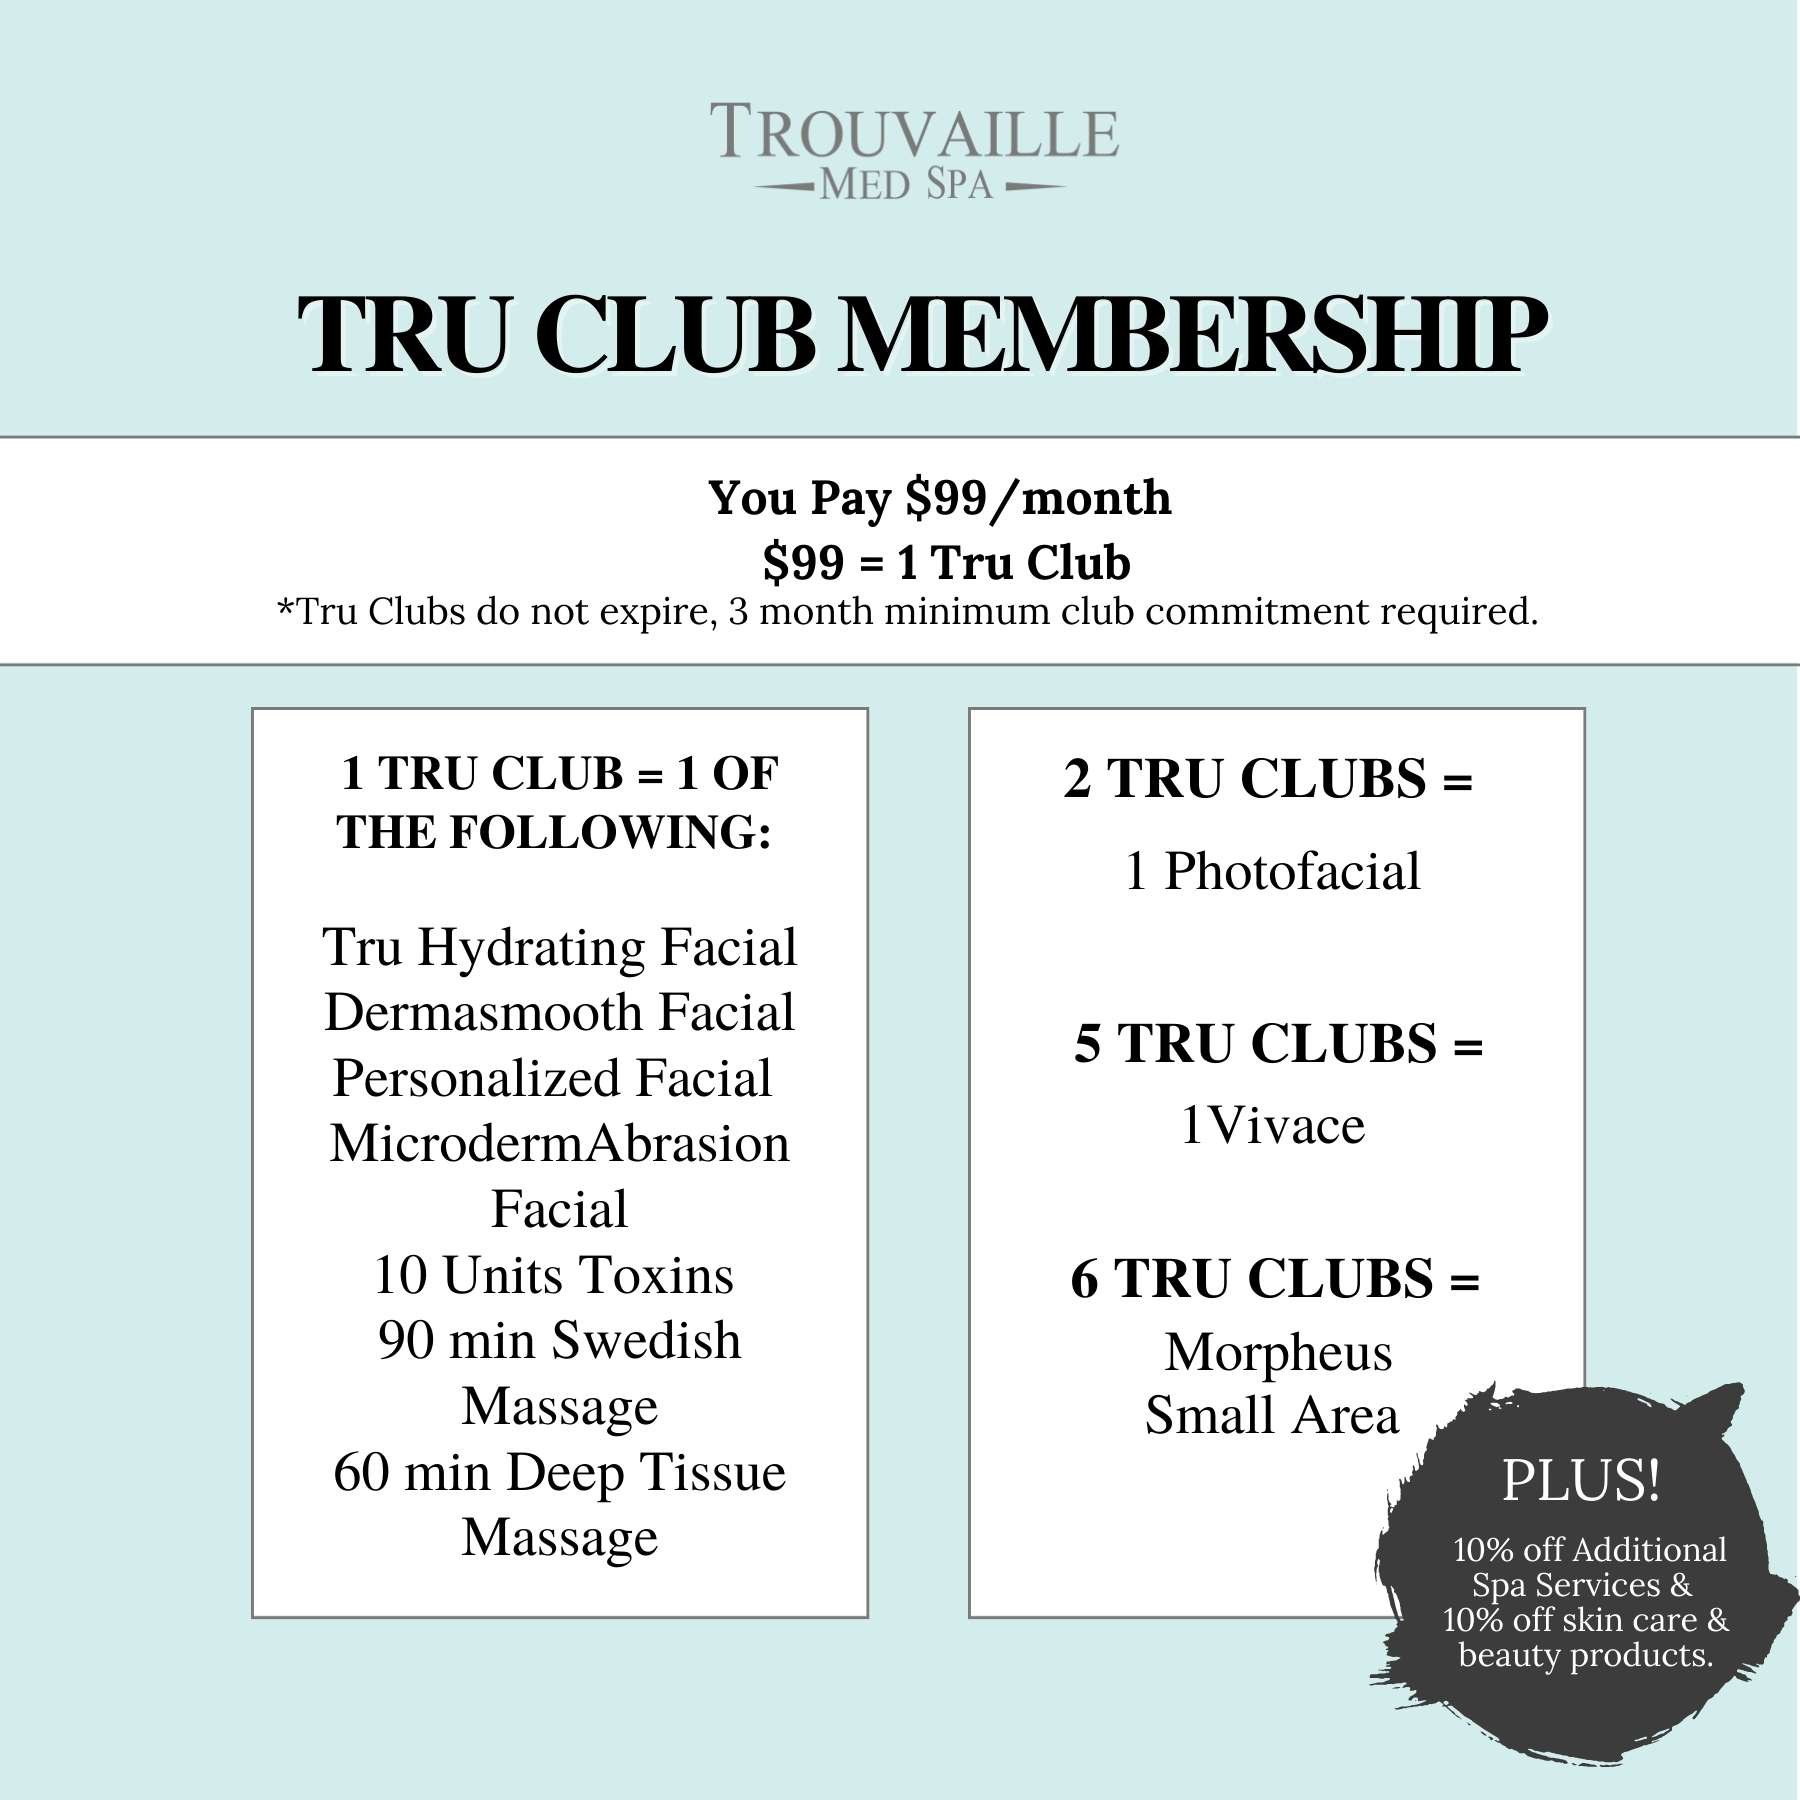 Tru Club Membership Our Med Spa Membership